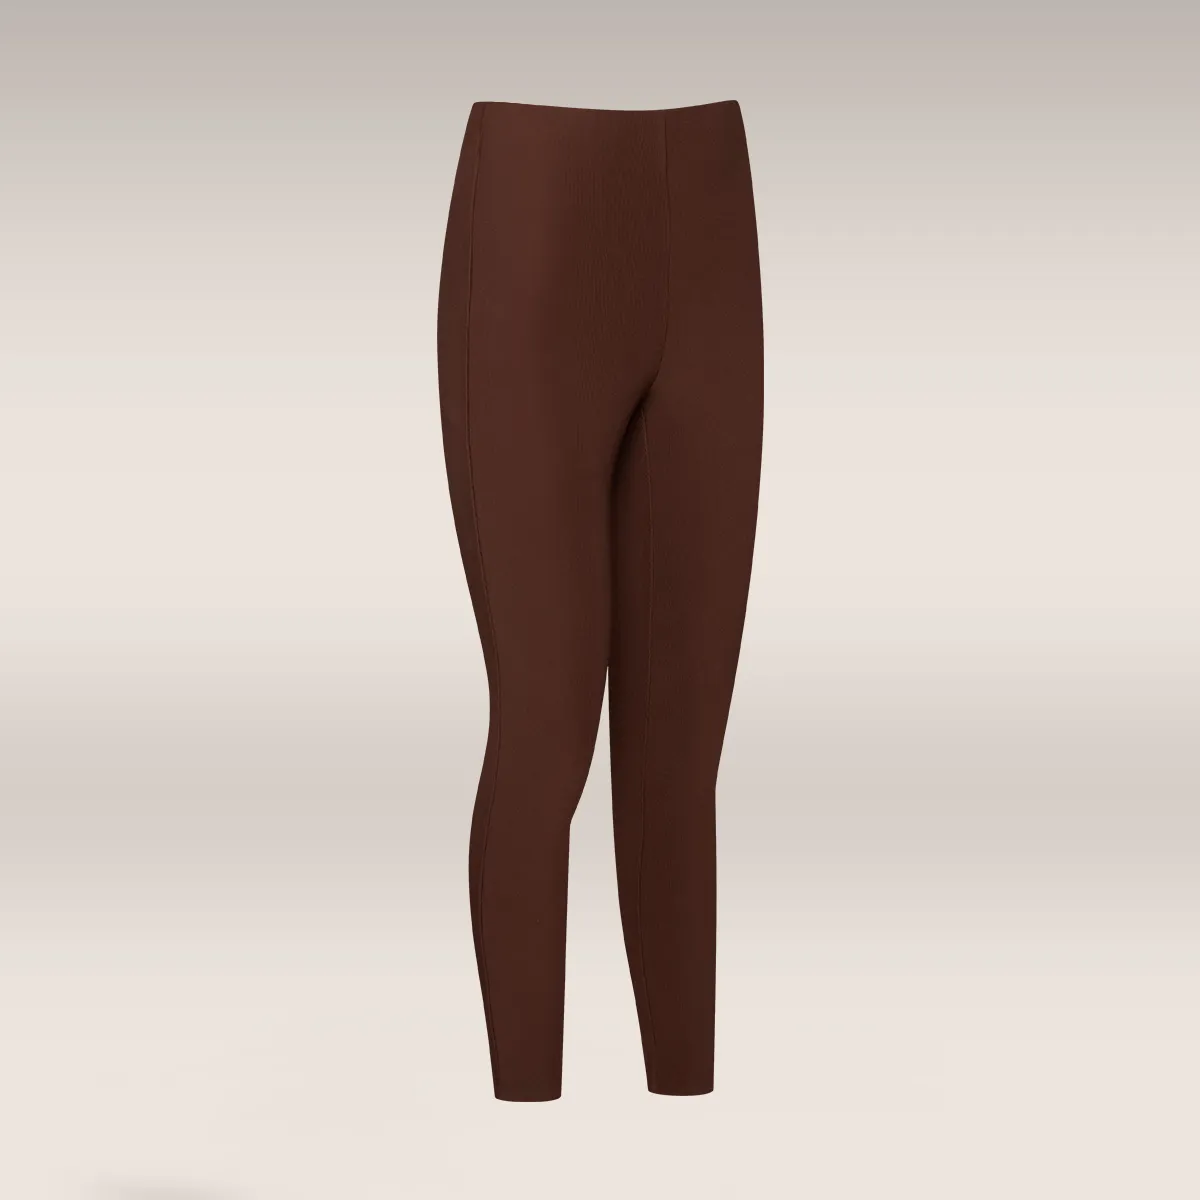 Textured leggings brown - Women's Leggings